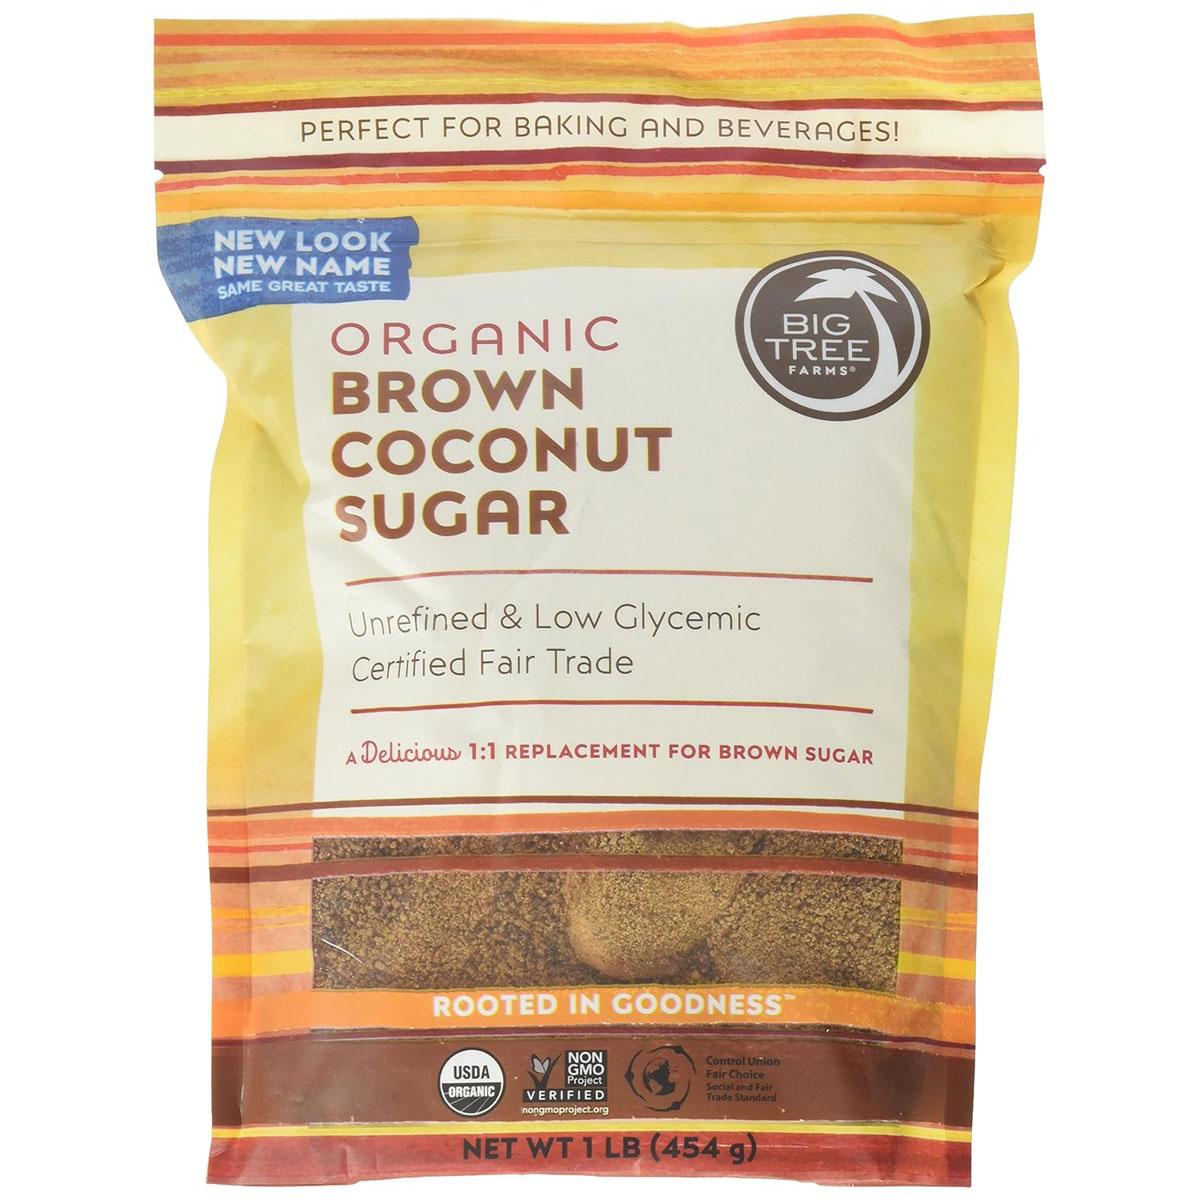 Big Tree Farms Organic Brown Coconut Sugar for $2.93 Shipped